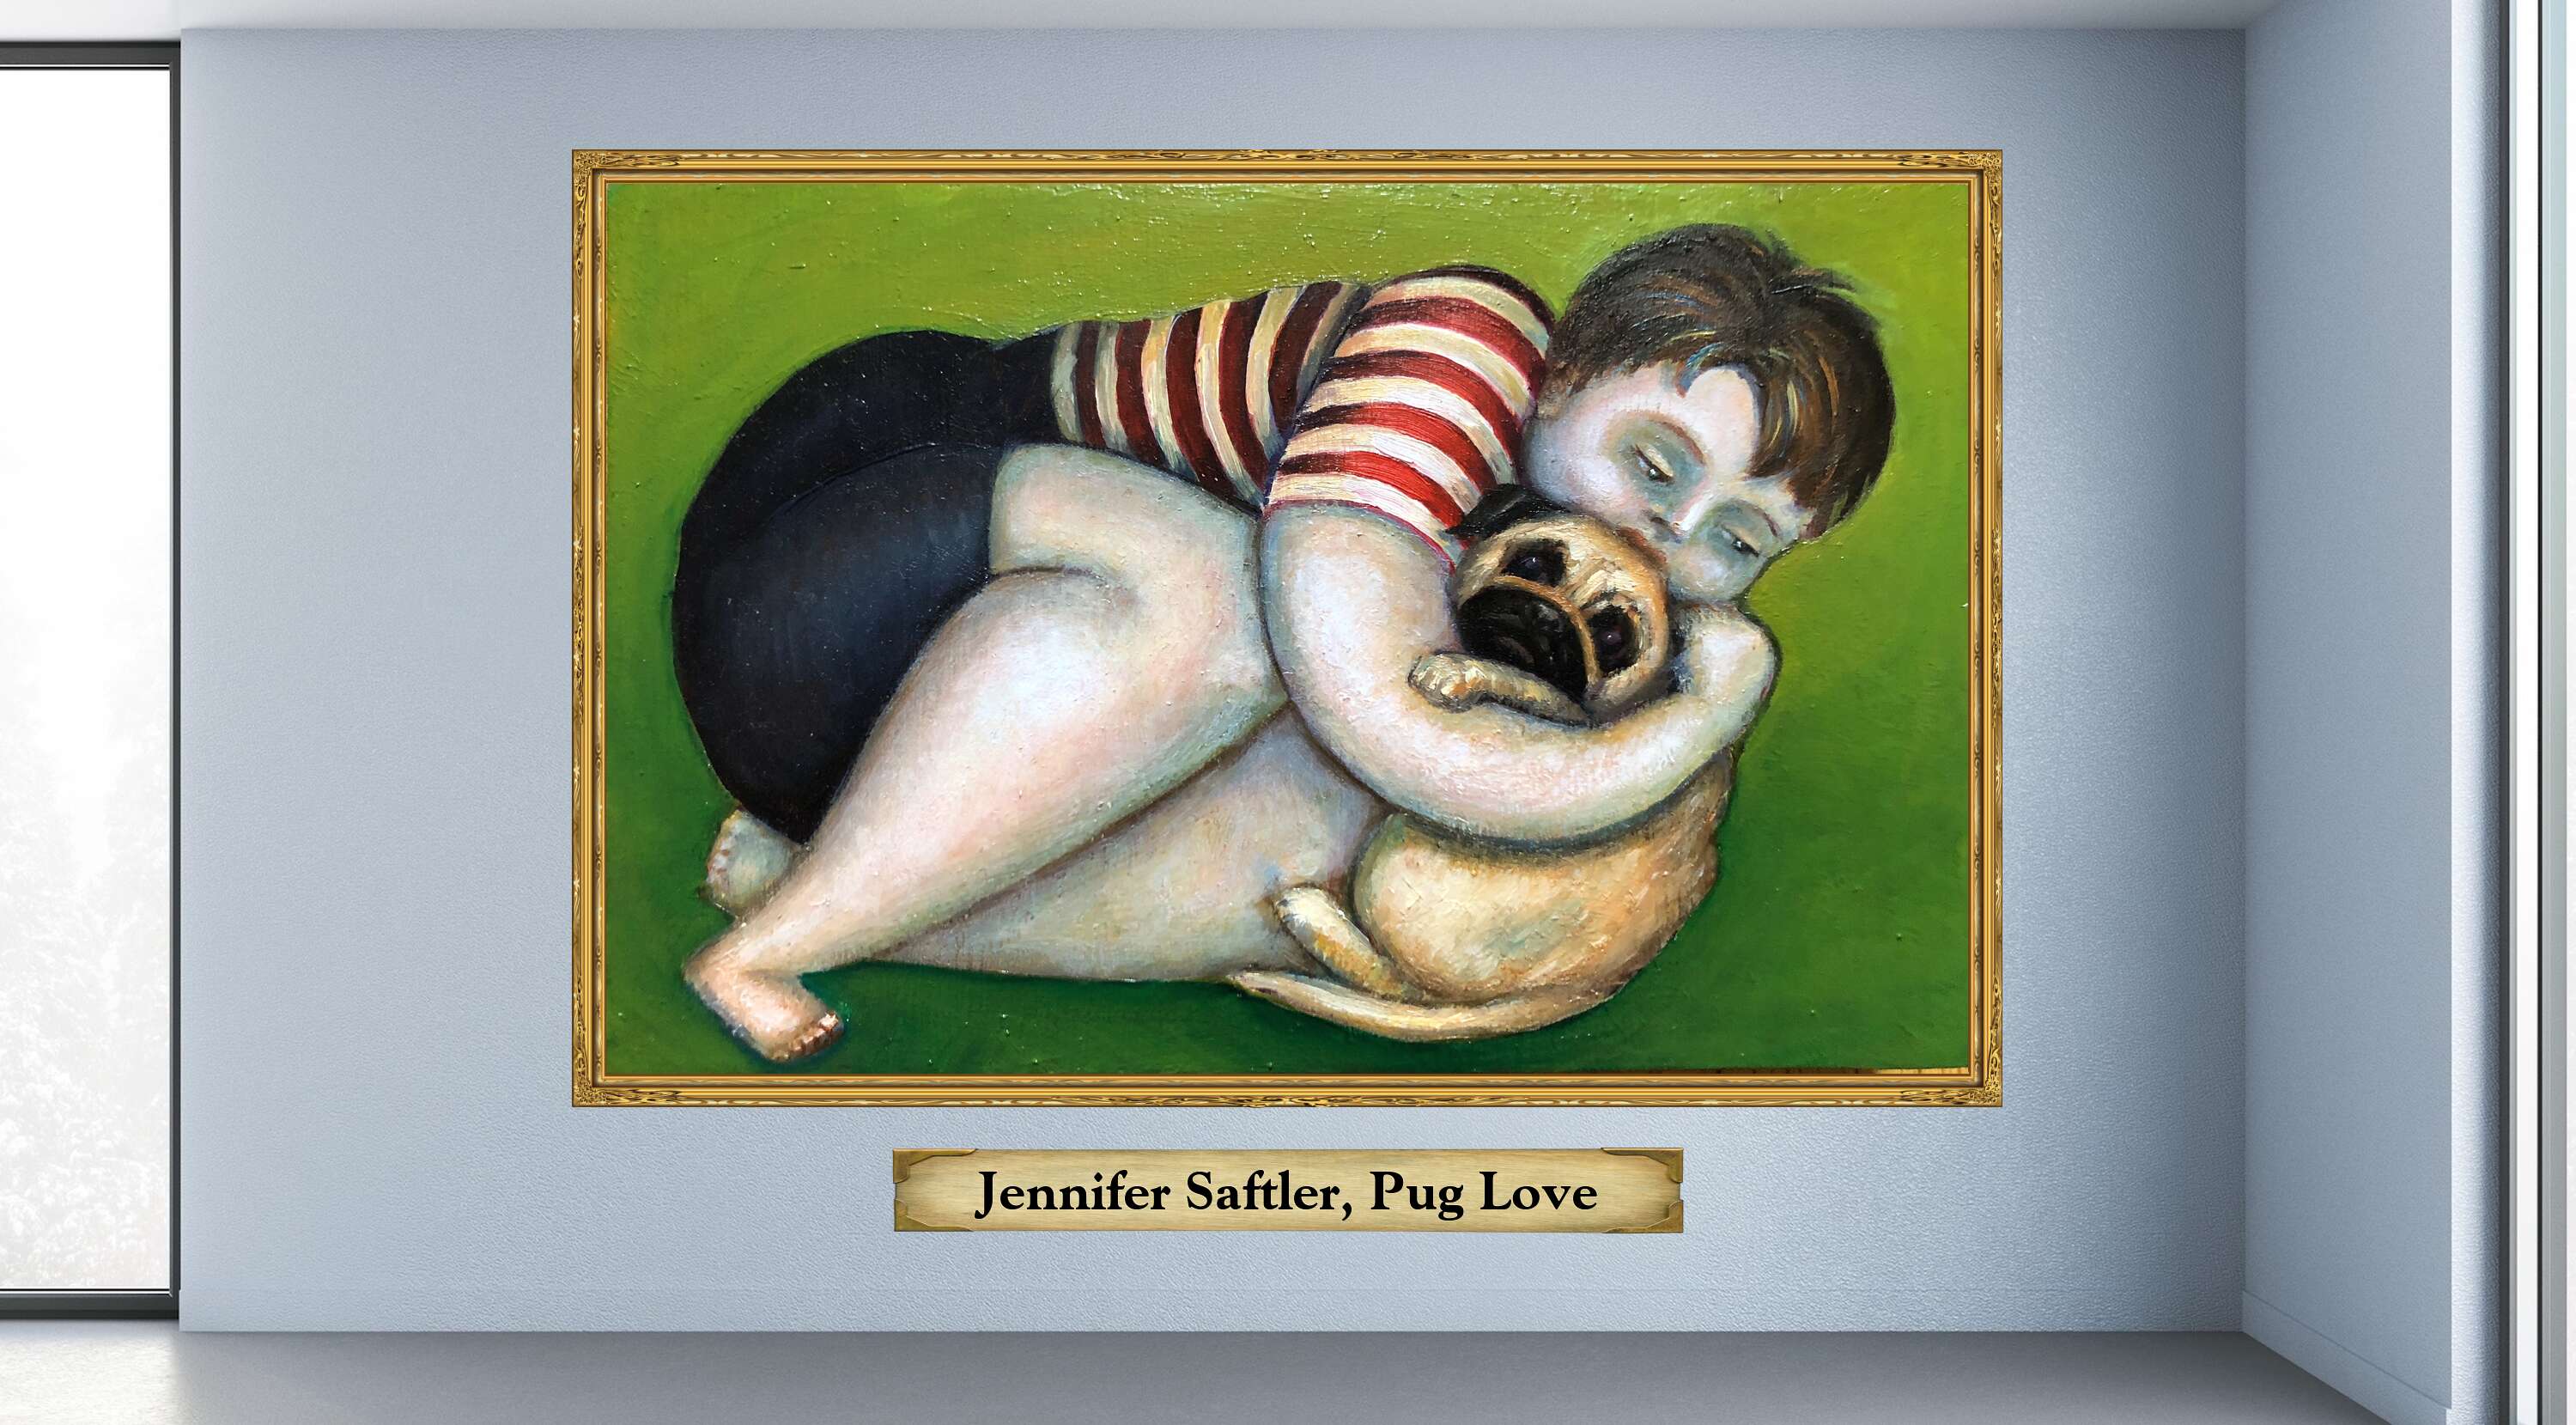 Jennifer Saftler, Pug Love